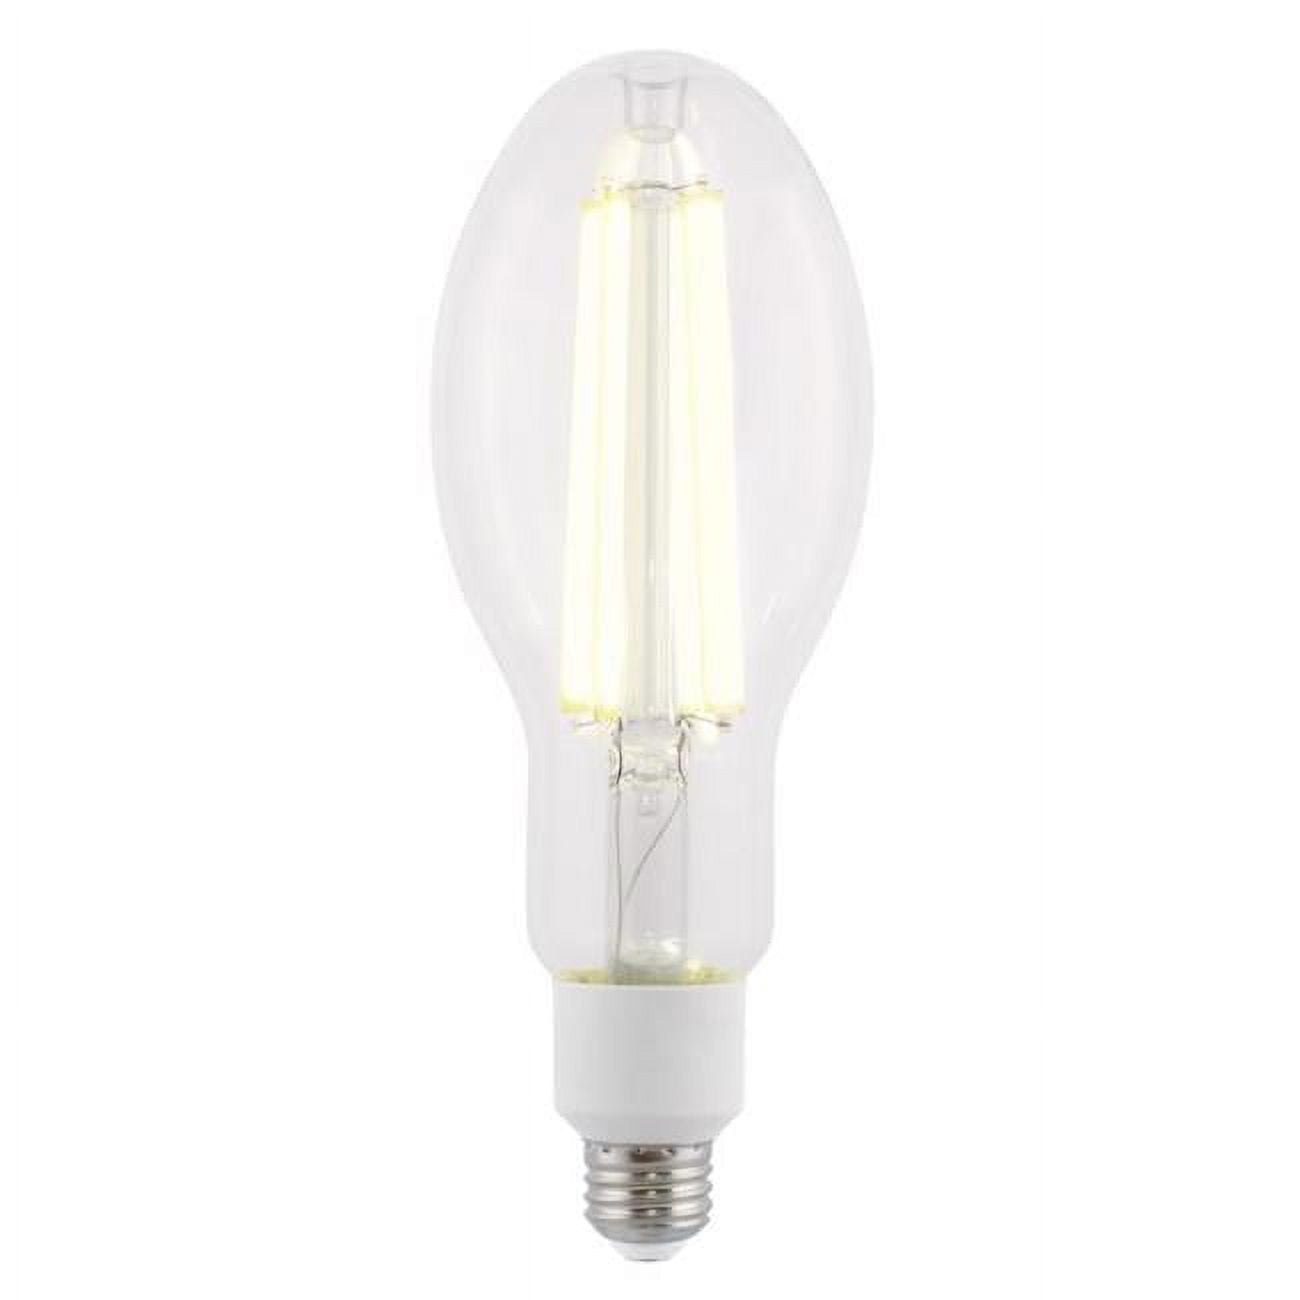 Picture of Westinghouse 3012192 ED28 E26 Medium Filament LED Bulb Daylight - 300W Equivalence